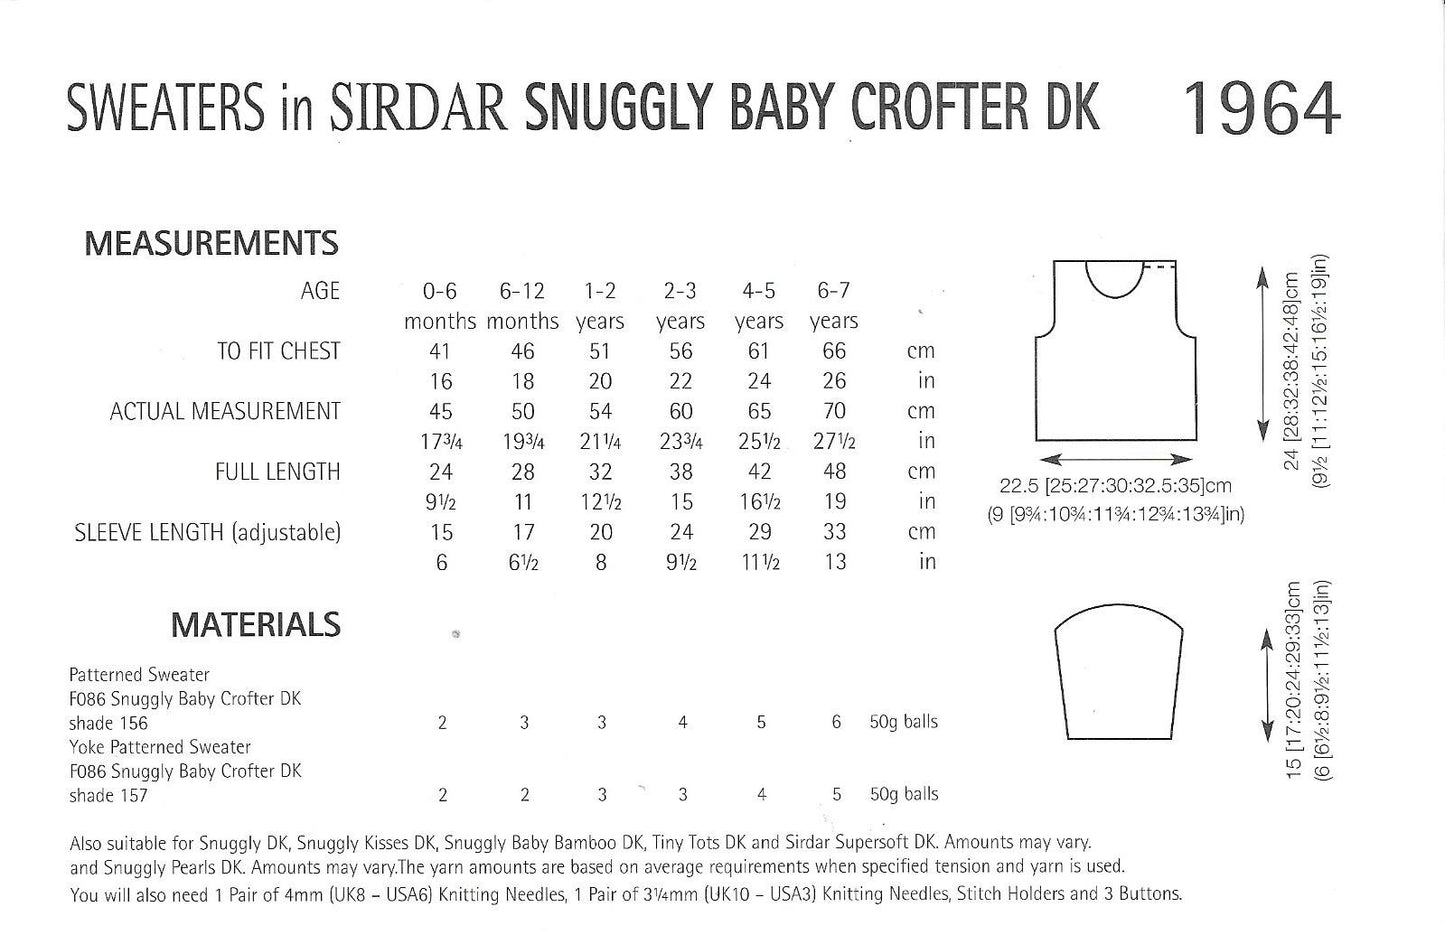 1964 Sirdar Snuggly Baby Crofter DK sweaters knitting pattern